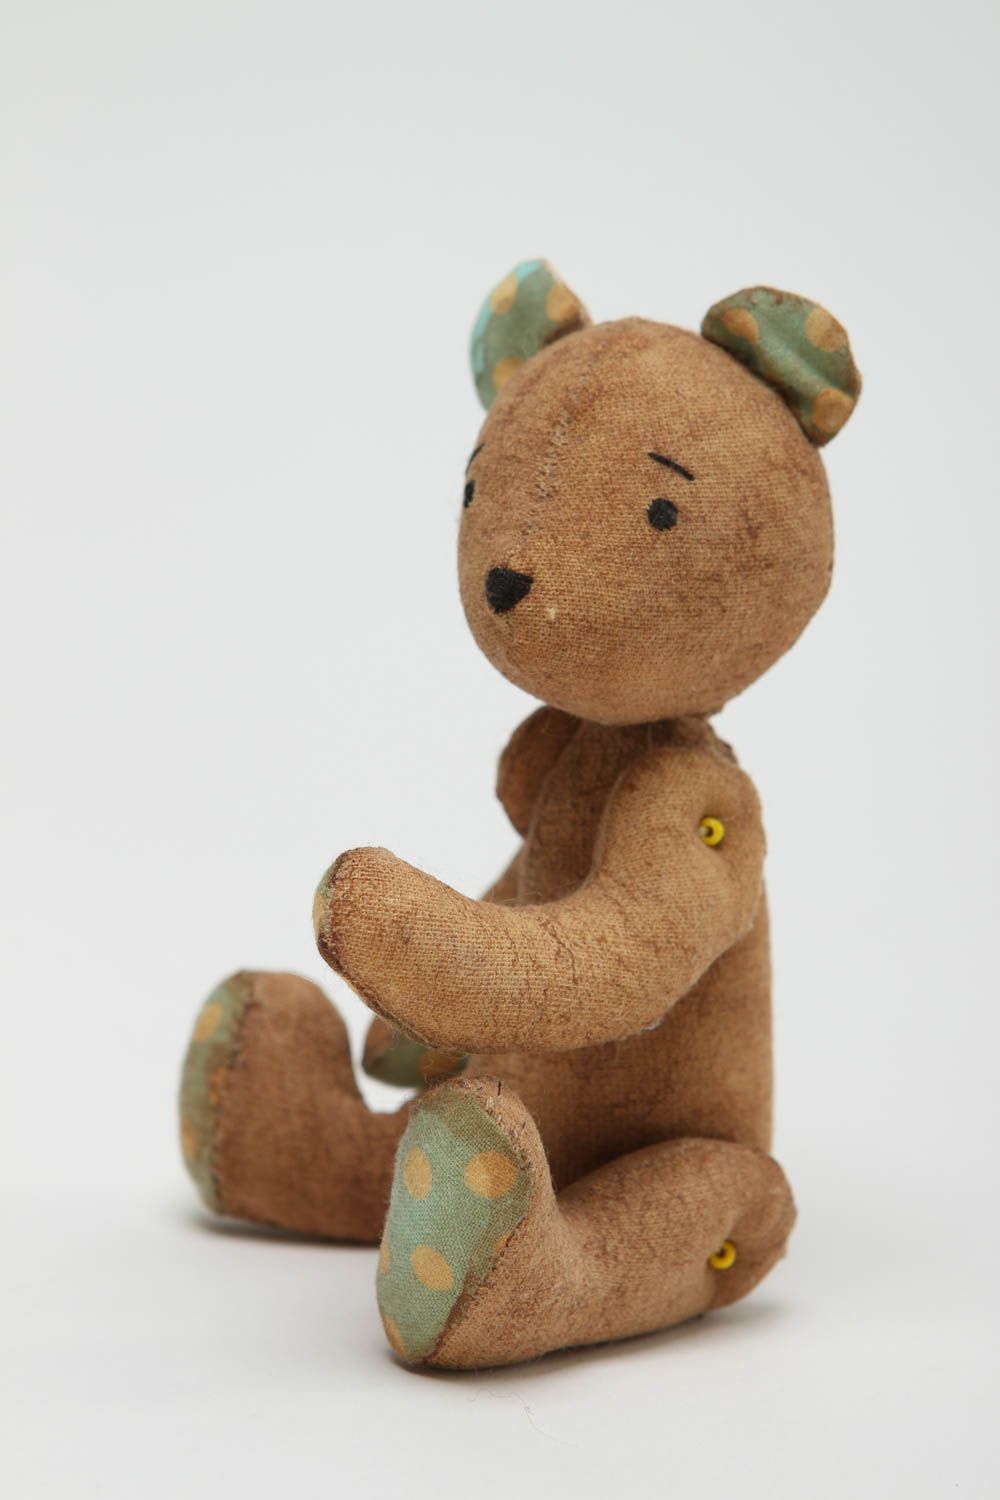 Handmade bear toy vintage toy nursery decor ideas present for children photo 2